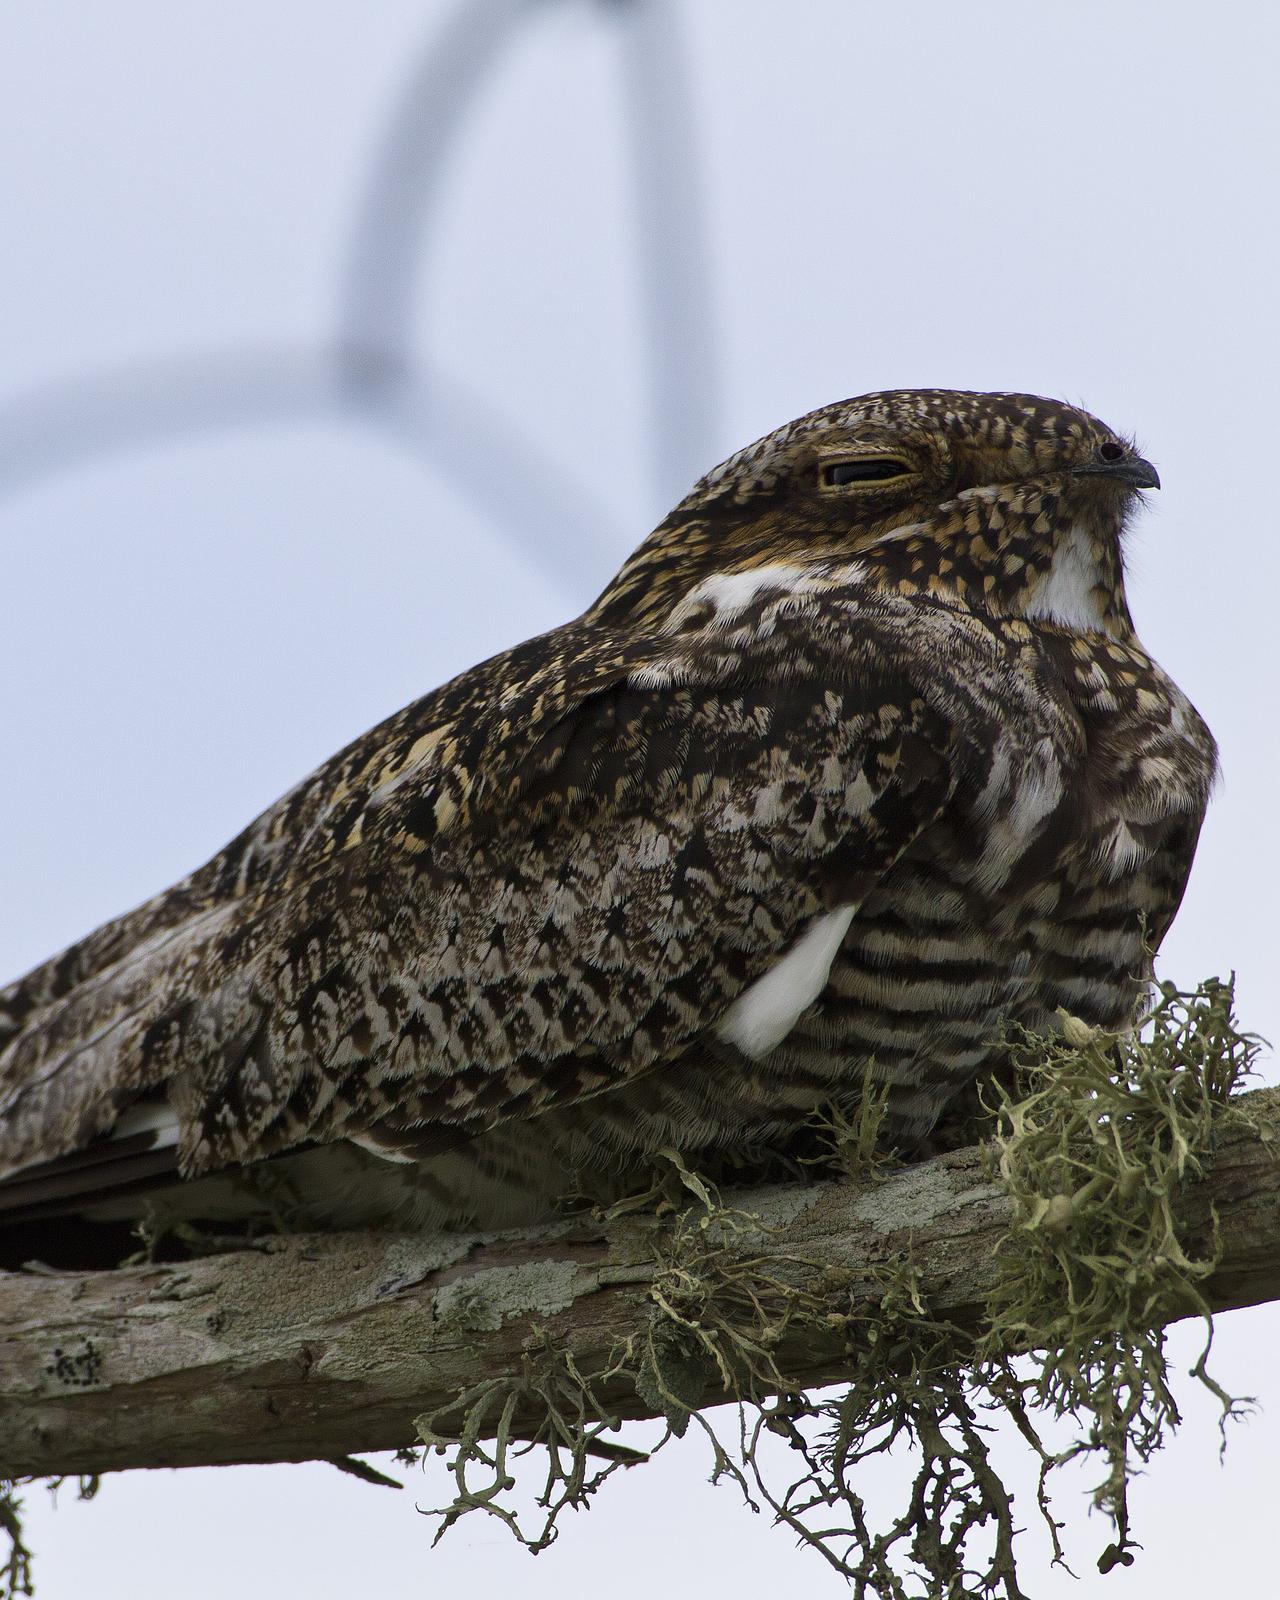 Common Nighthawk Photo by Bill Adams